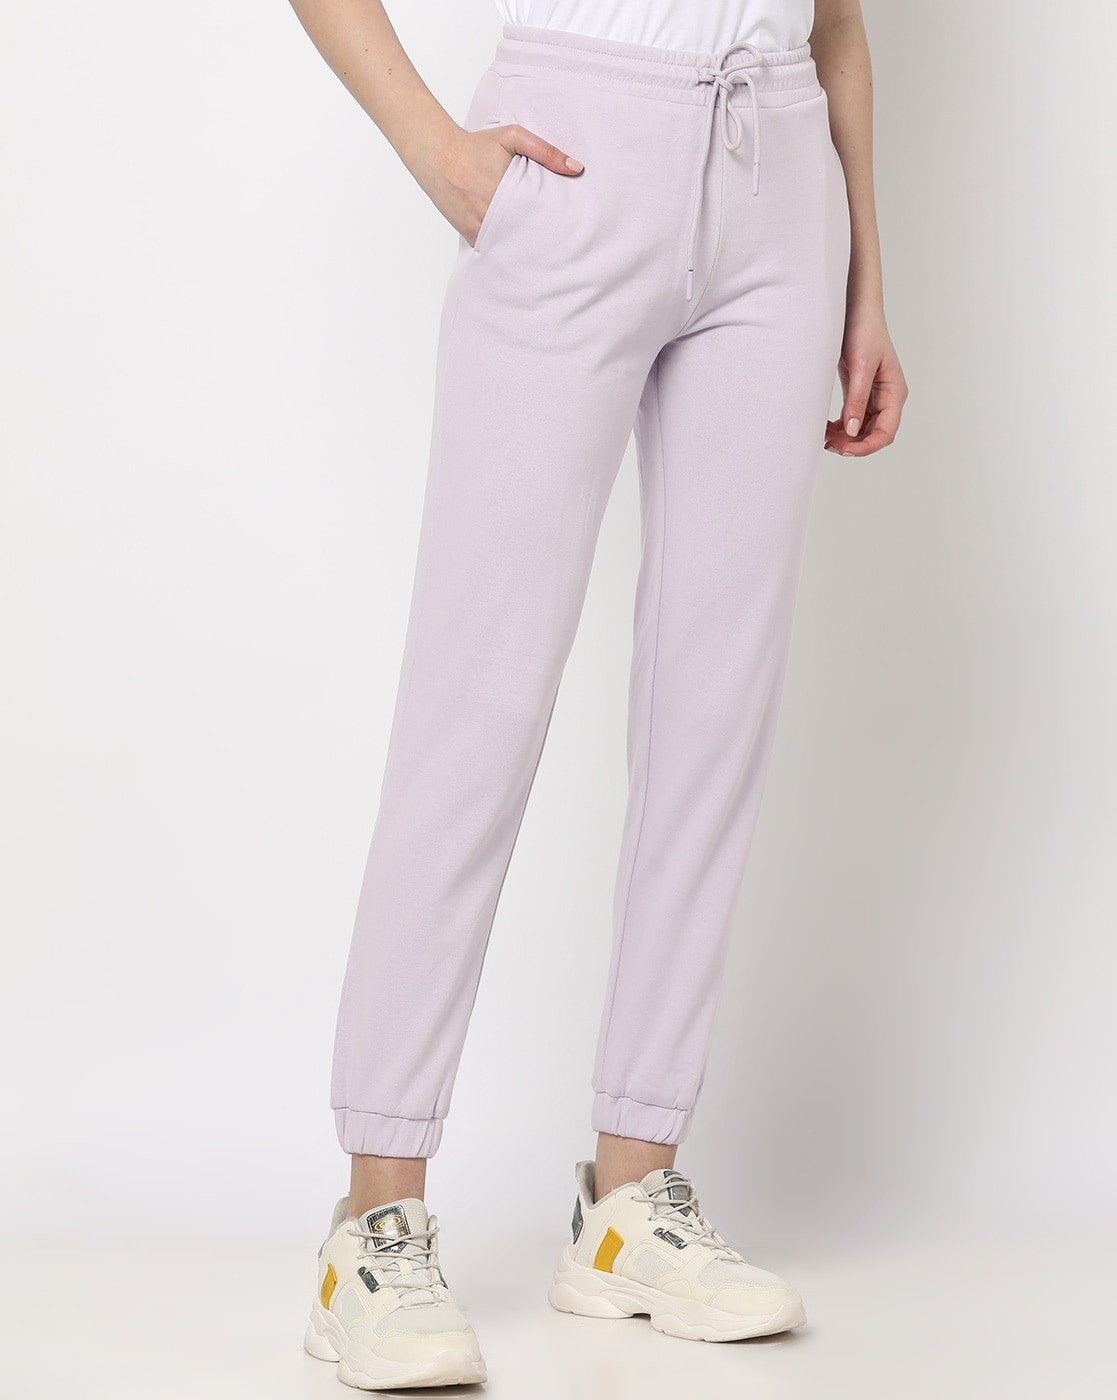 Buy Purple Track Pants for Women by Fyre Rose Online